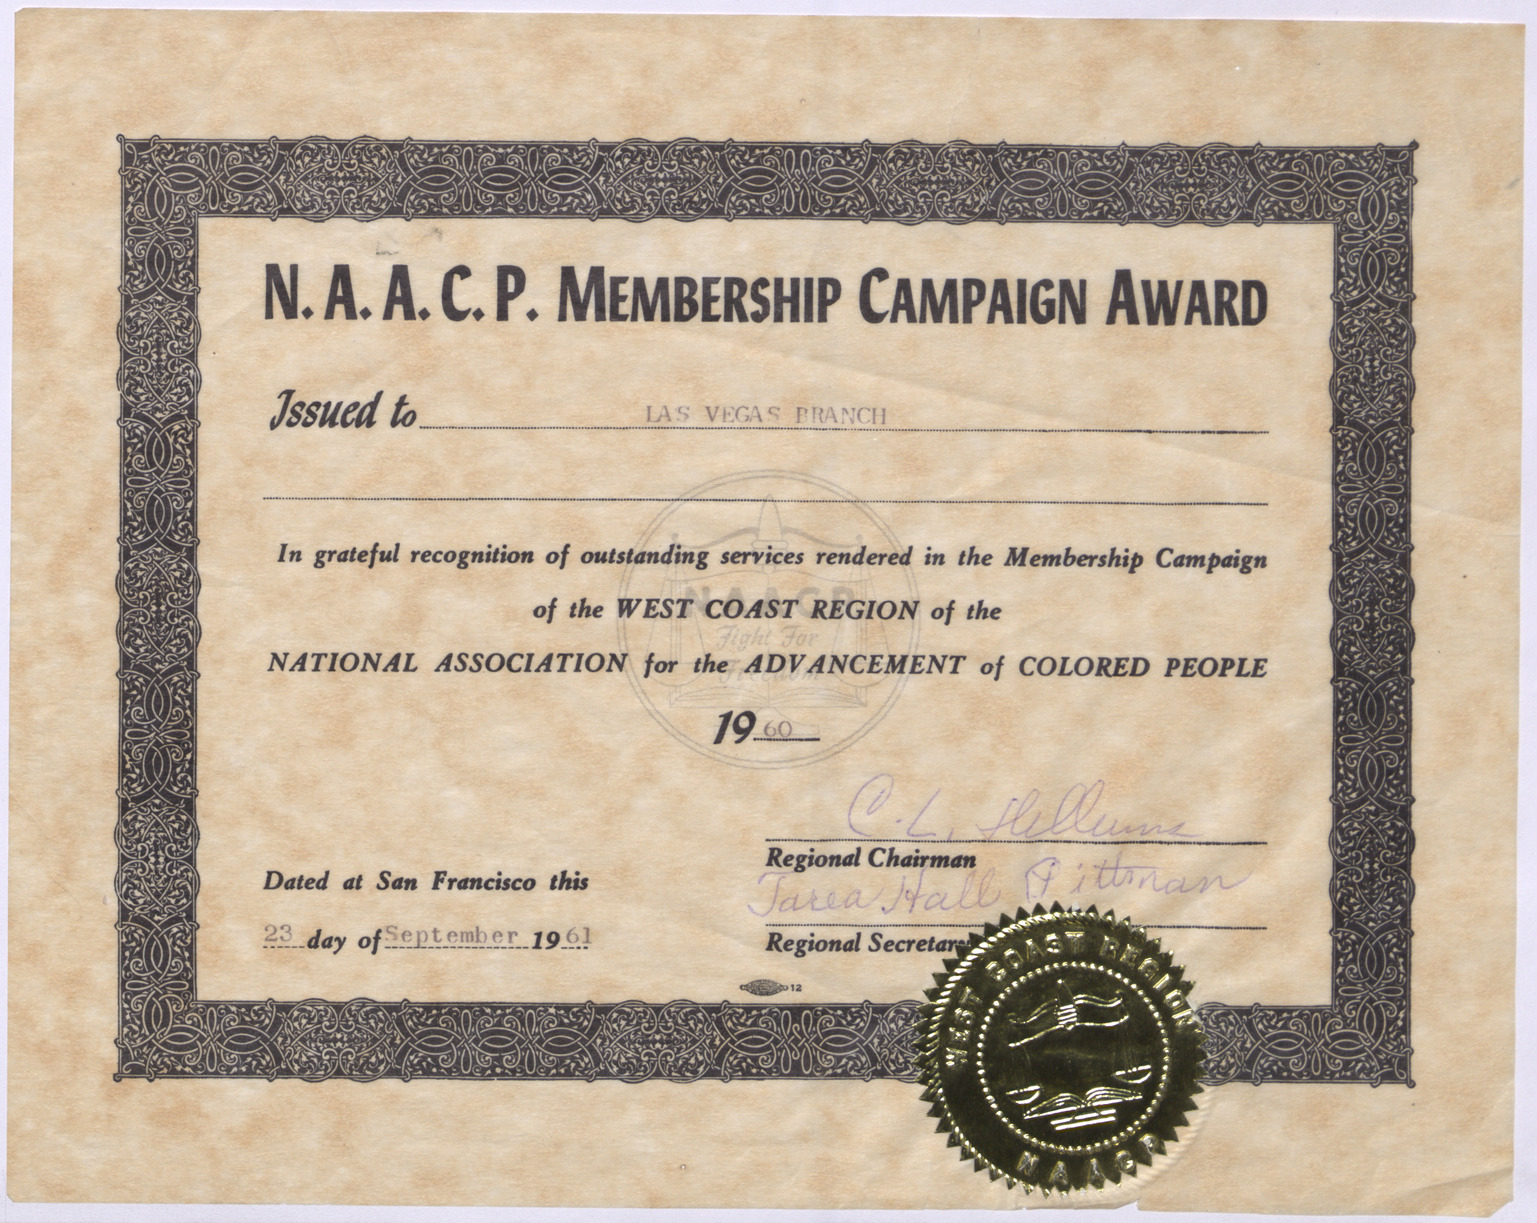 NAACP Membership Campaign Award for Las Vegas branch, 1960